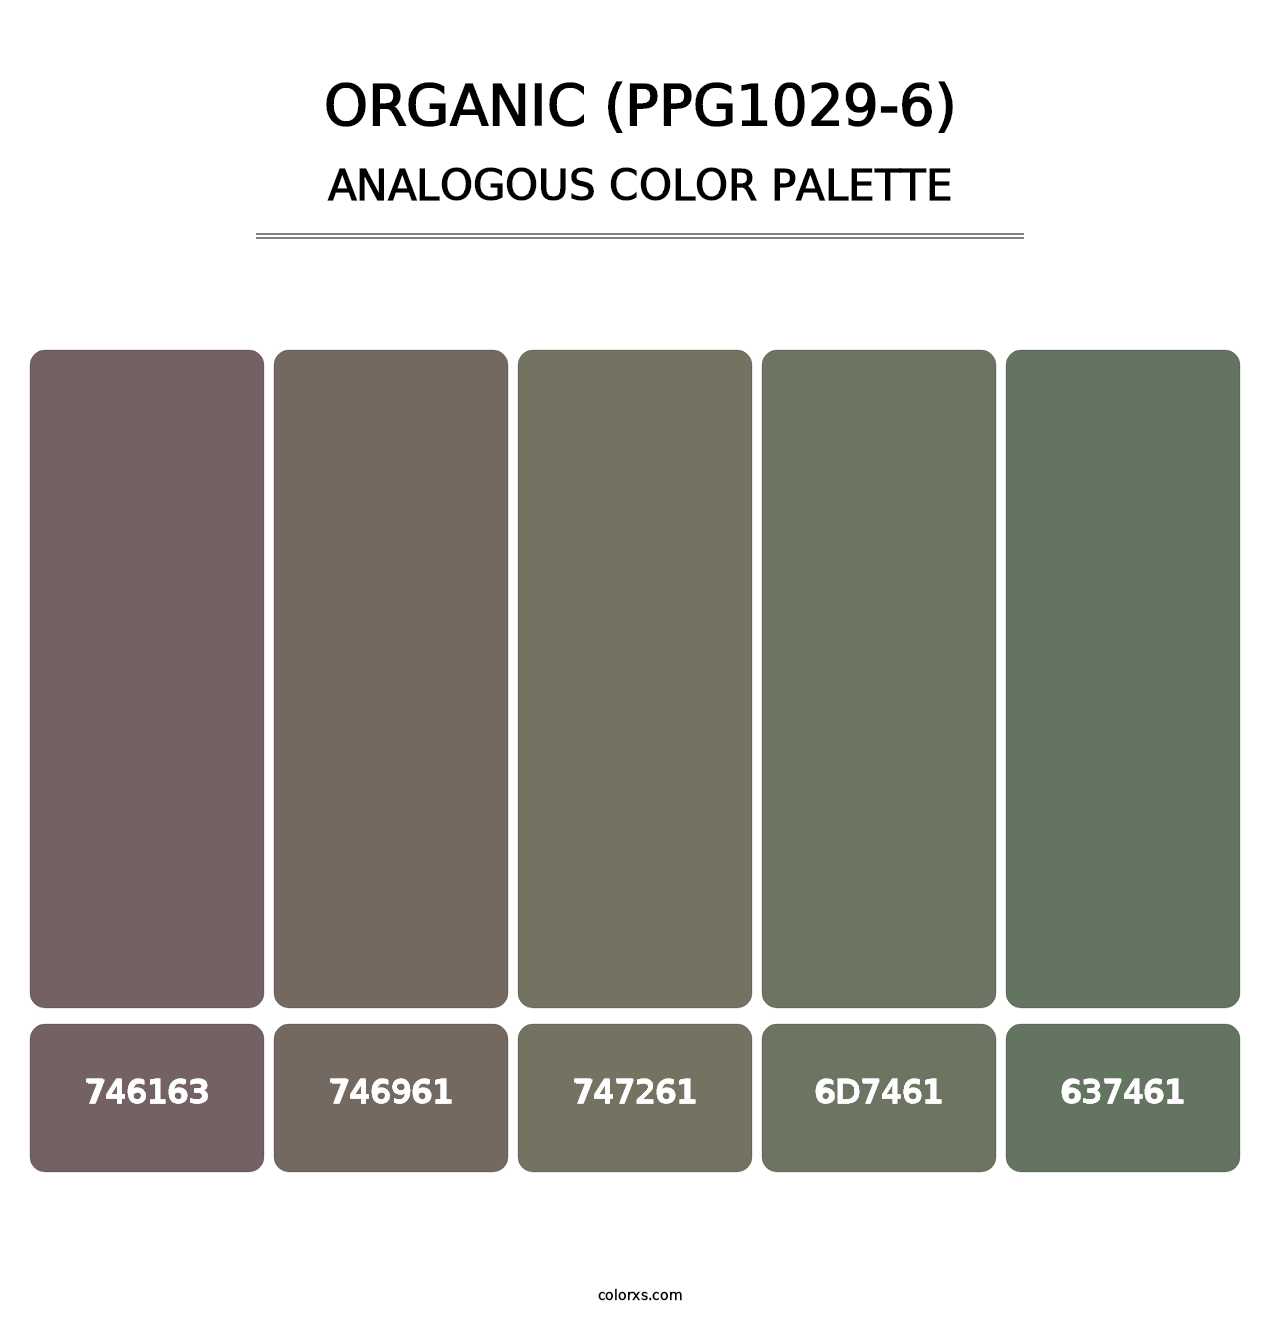 Organic (PPG1029-6) - Analogous Color Palette